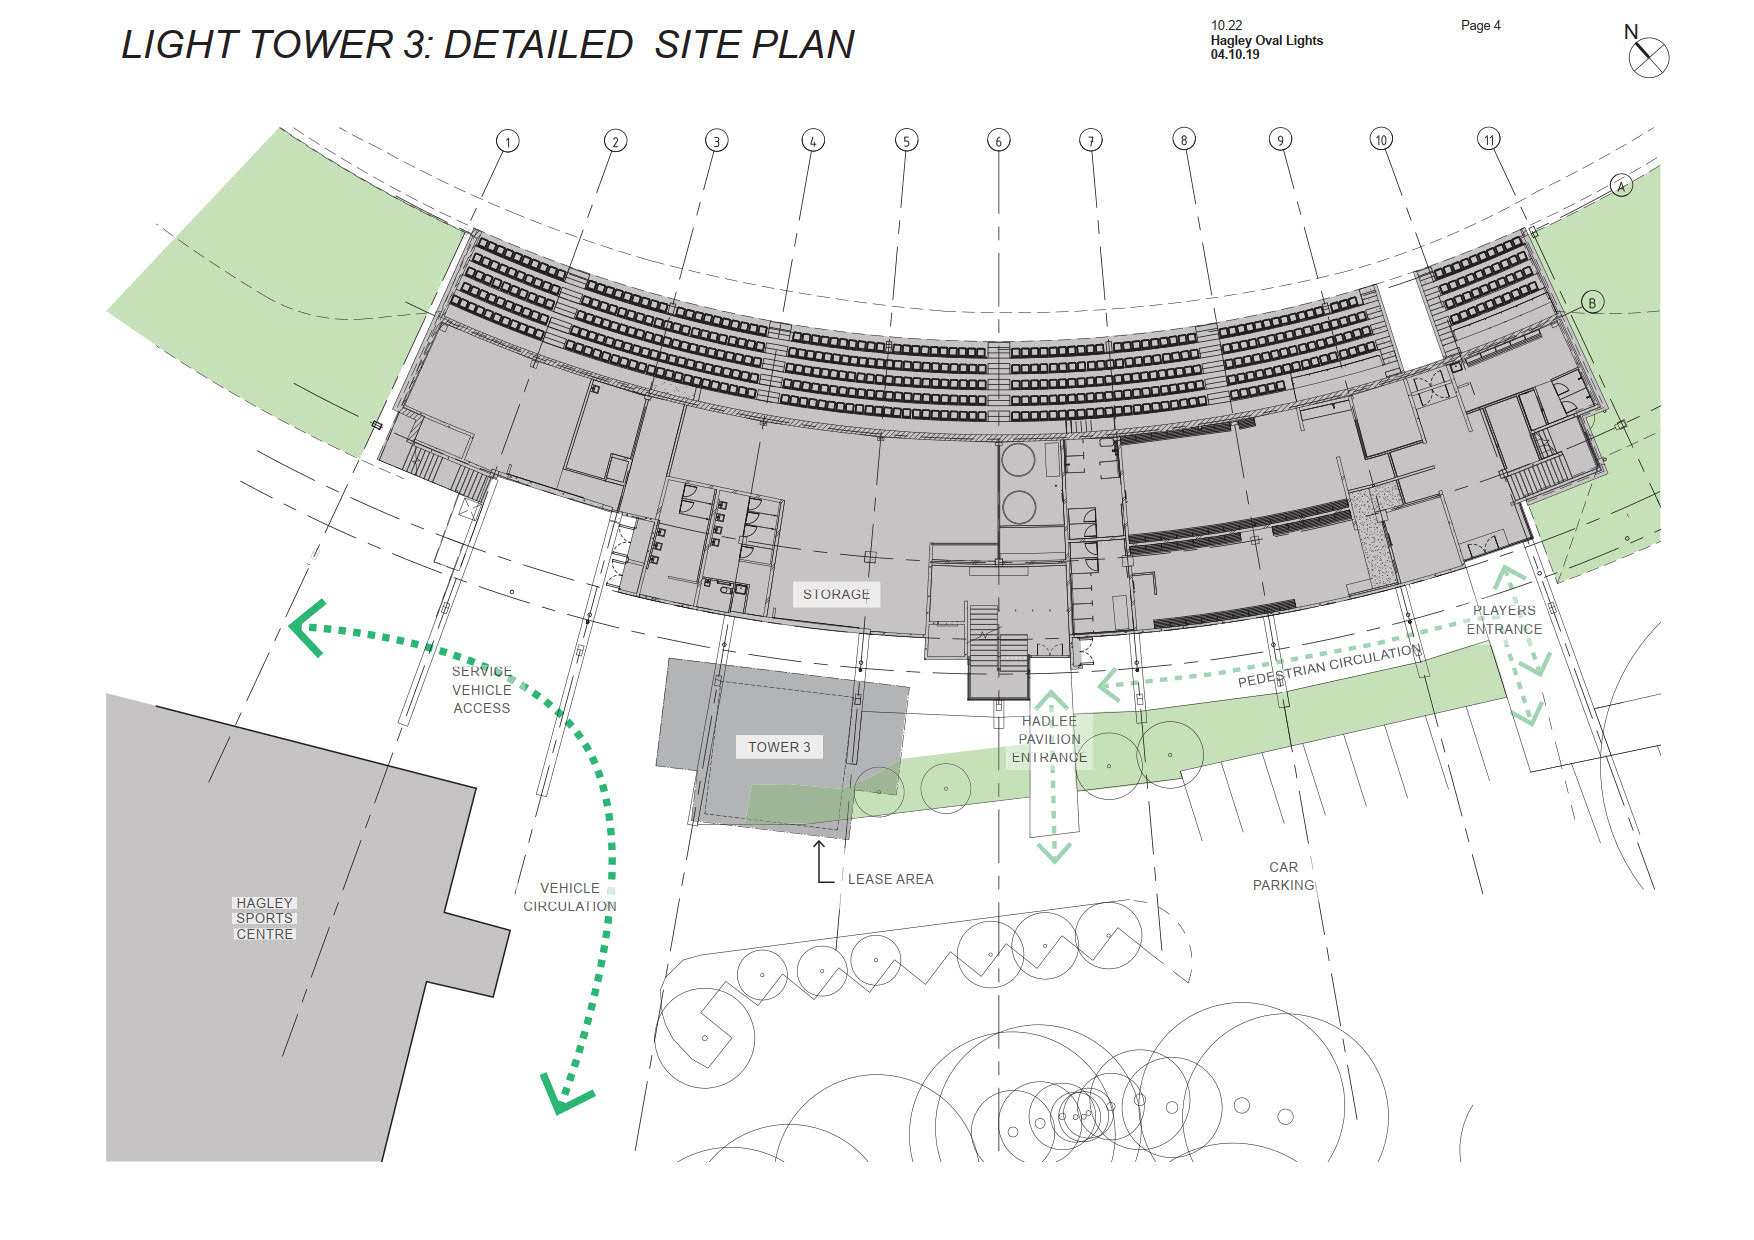 Lighting tower 3-detailed site plan